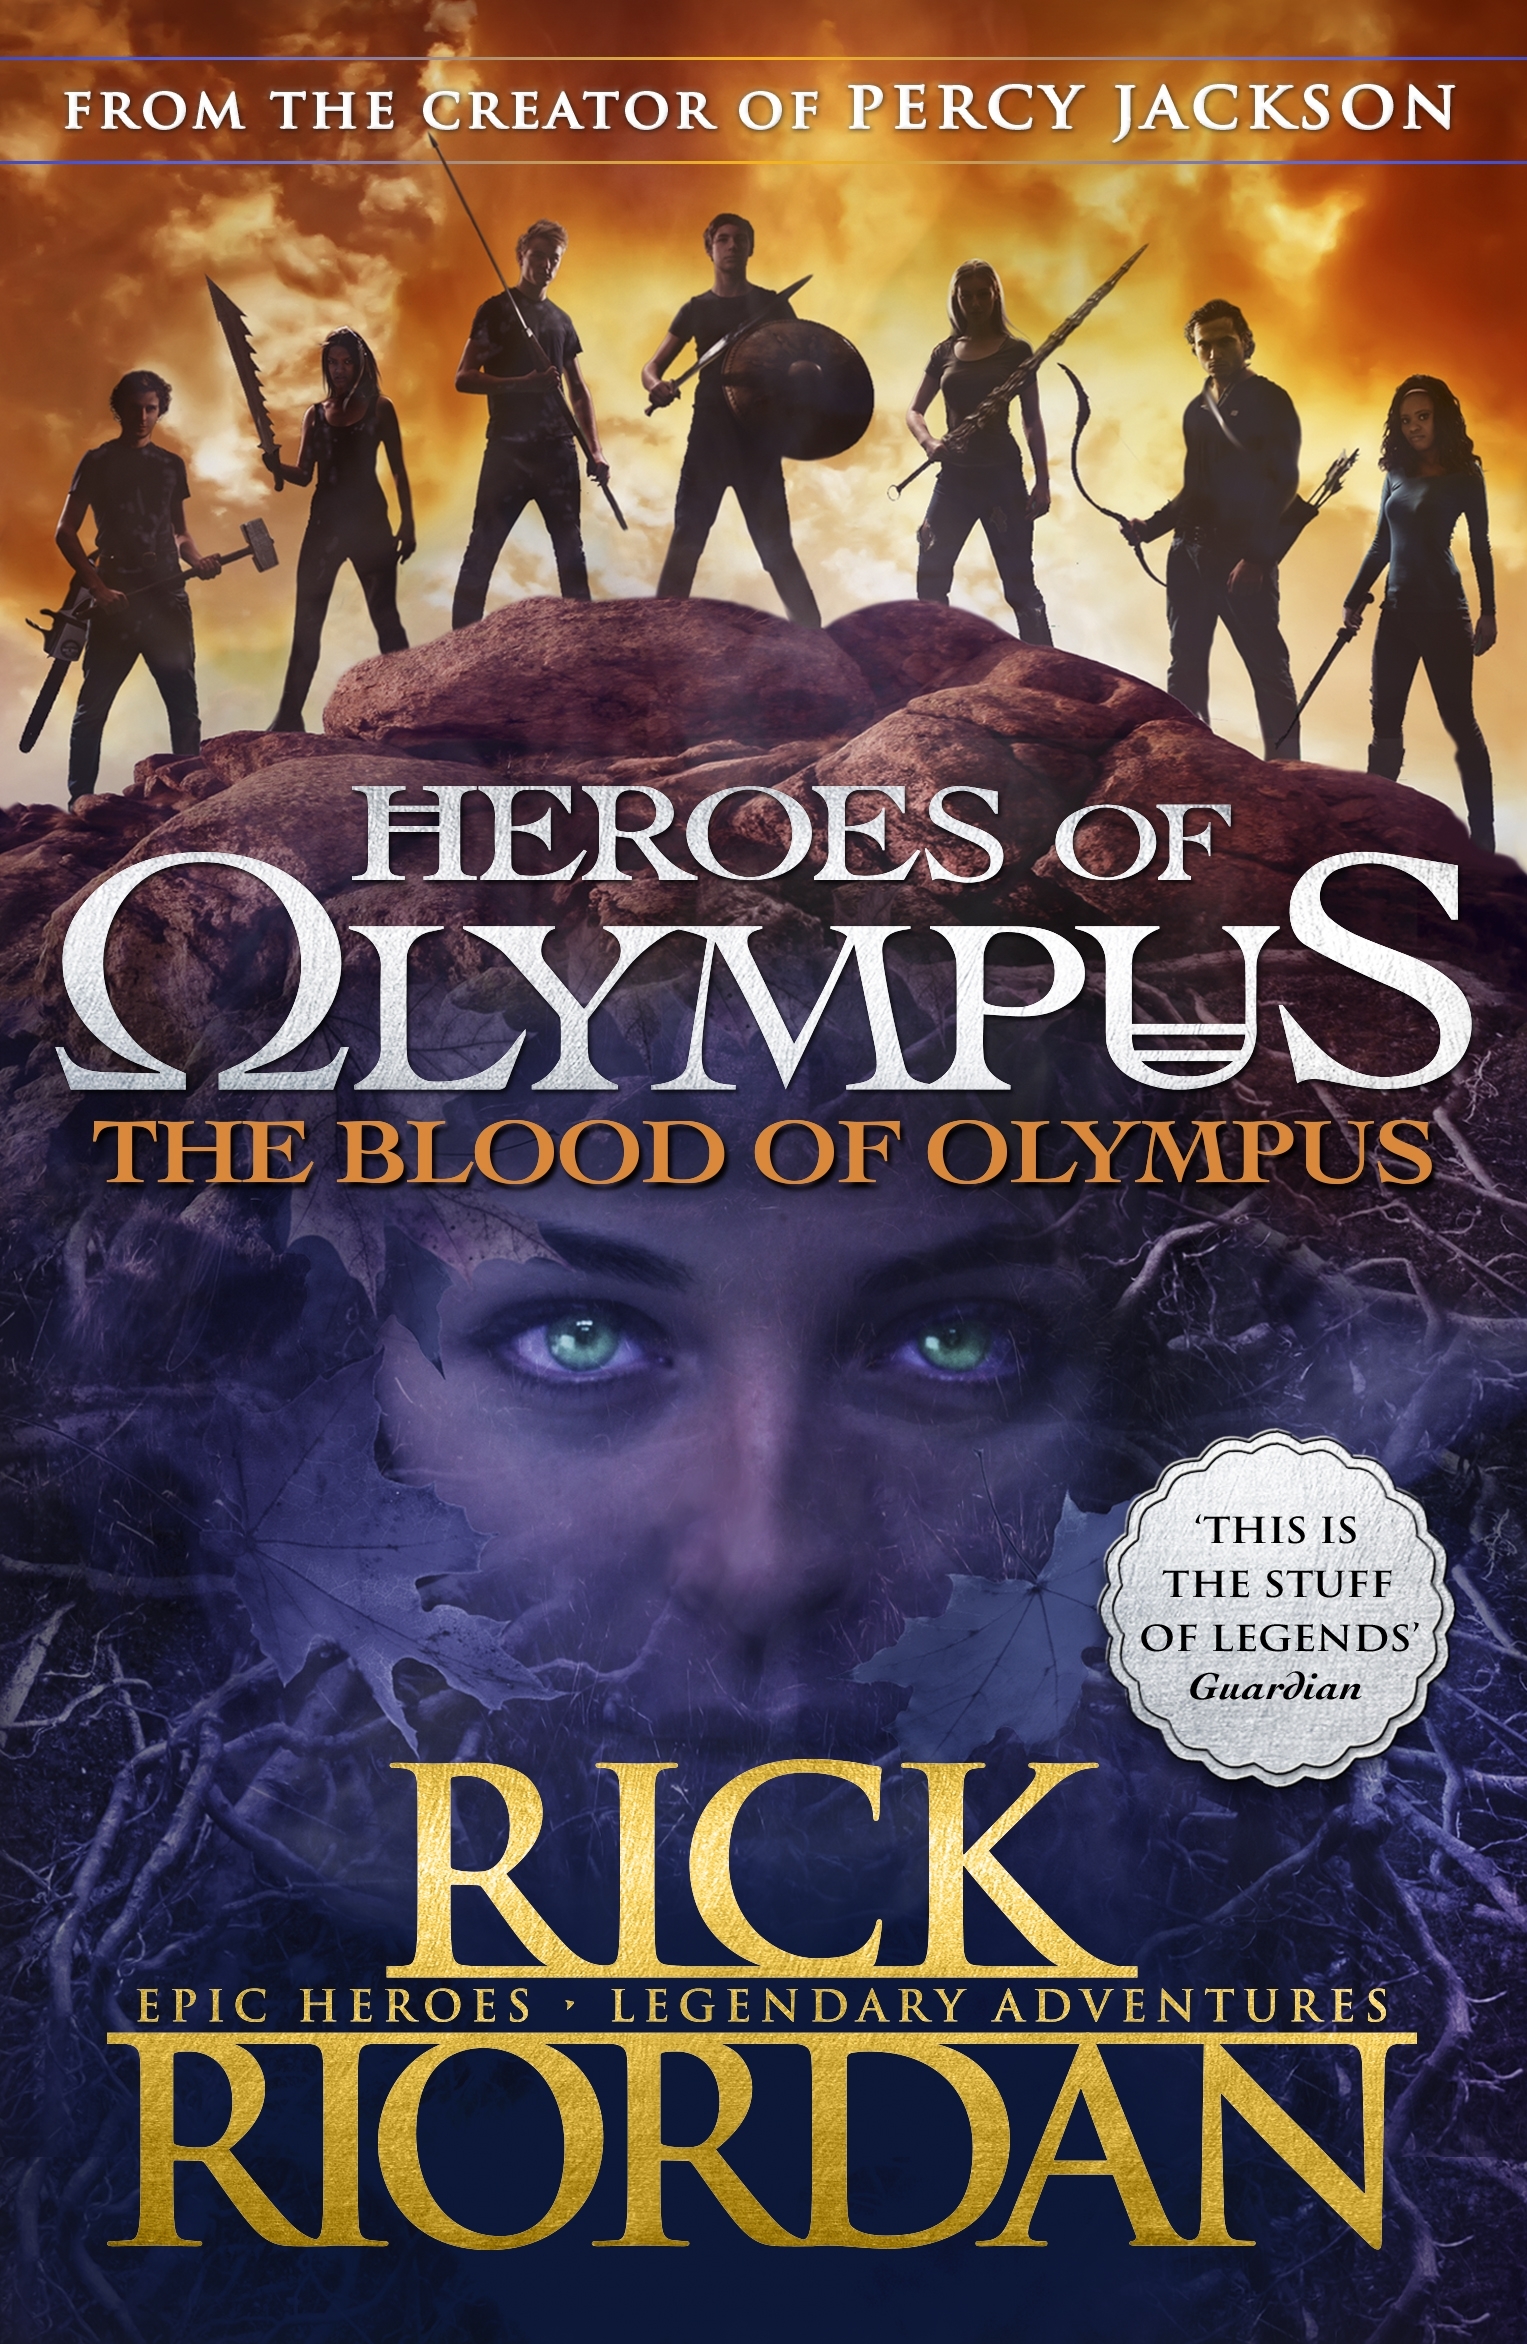 book 3 of the heroes of olympus